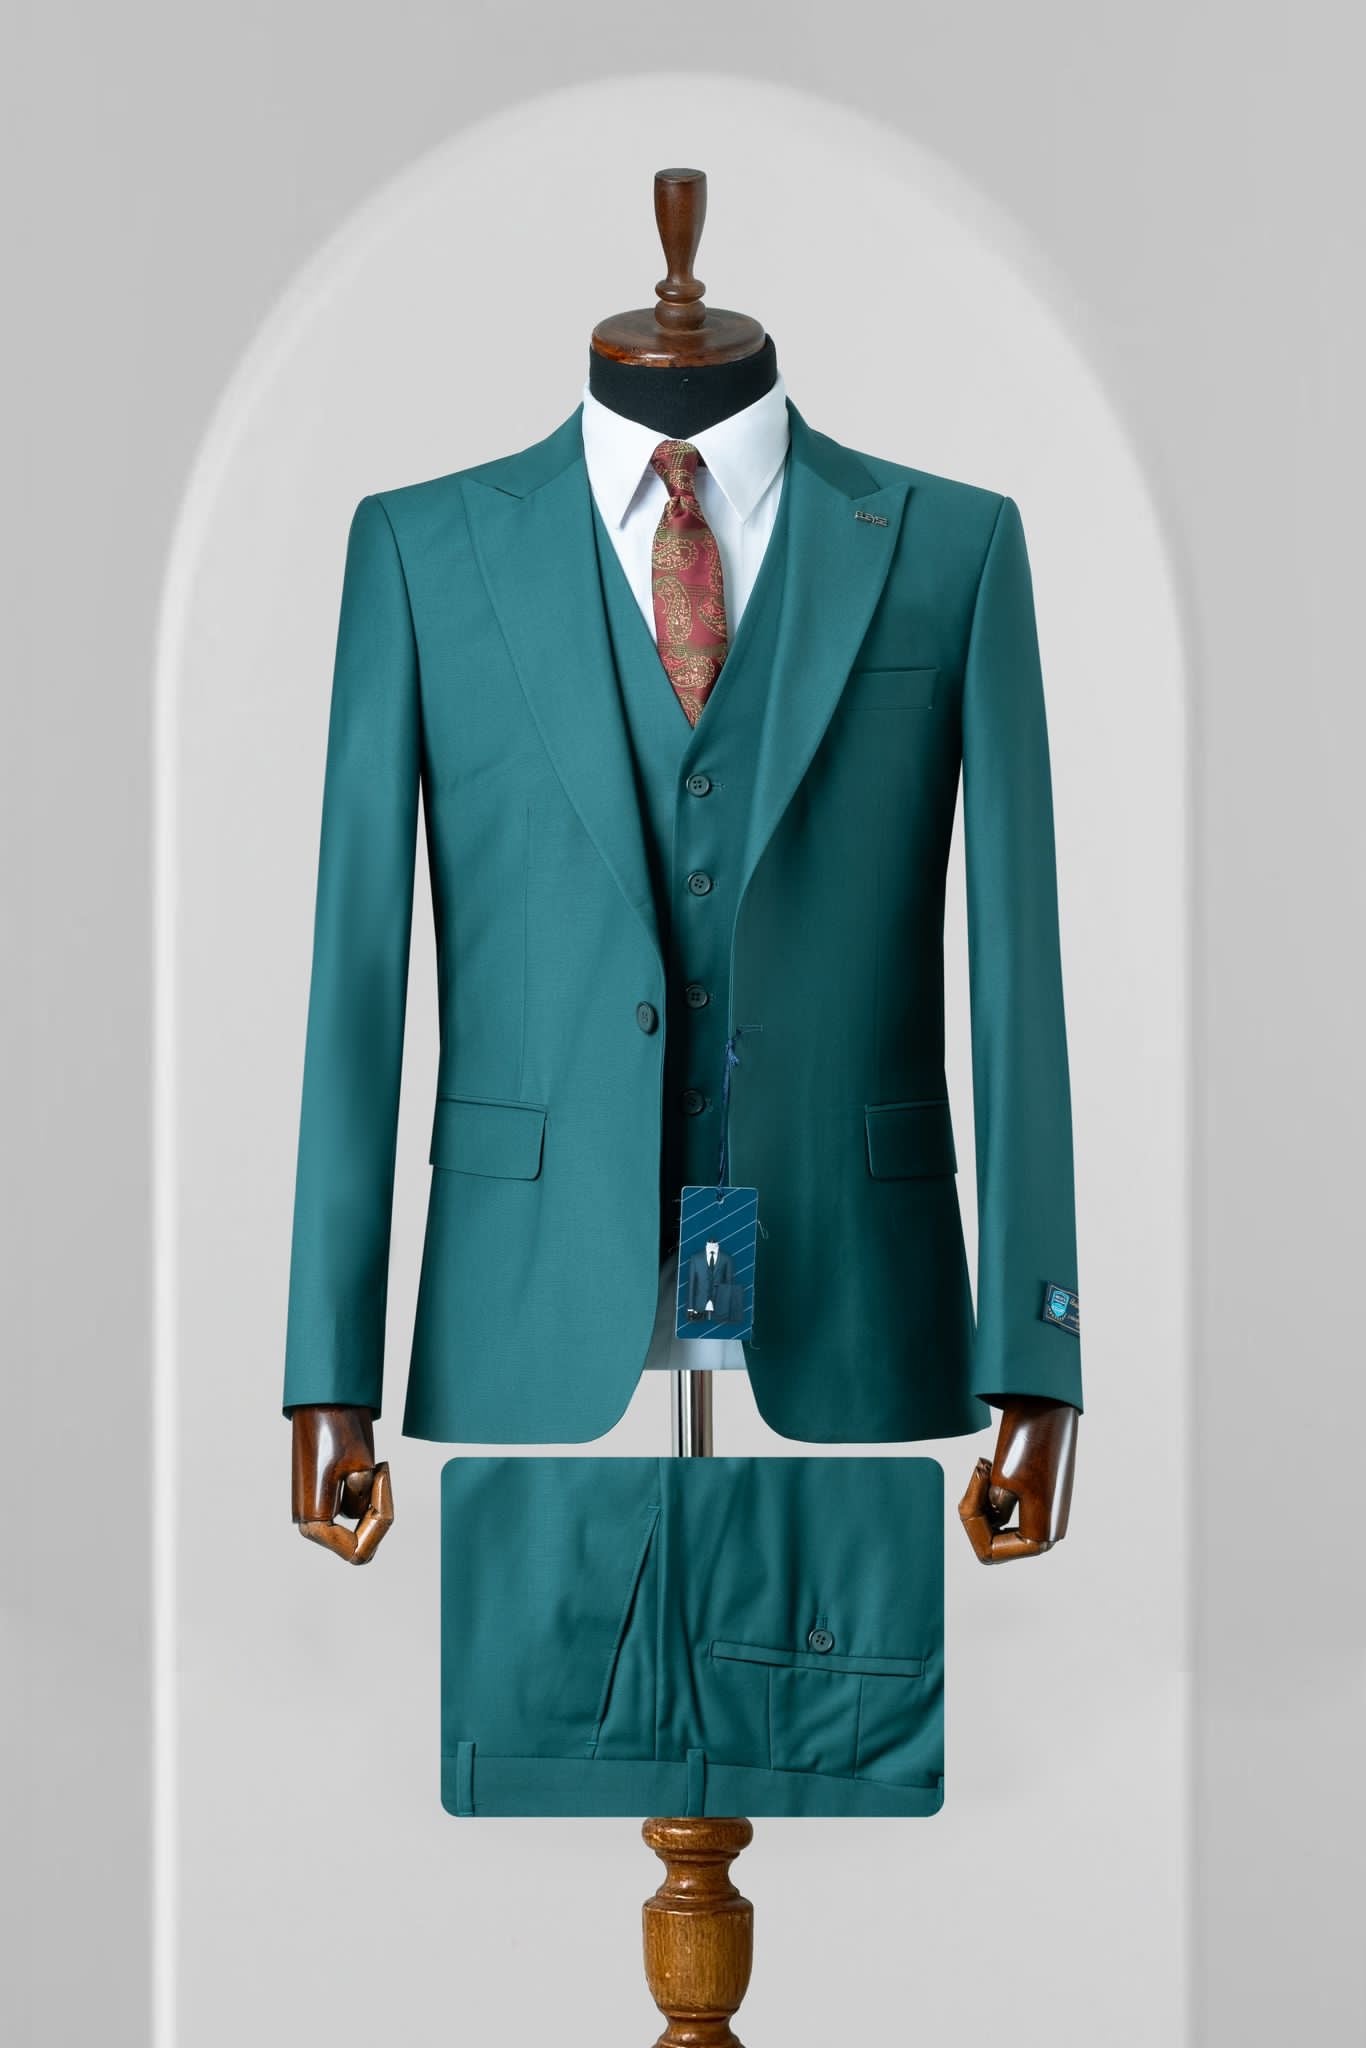 Turkish 3-Piece Suit Wholesale: Authentic 3-Piece Elegance for Discerning Retailers - 6 Suit Pack (Model: AA_Tur_4_264)